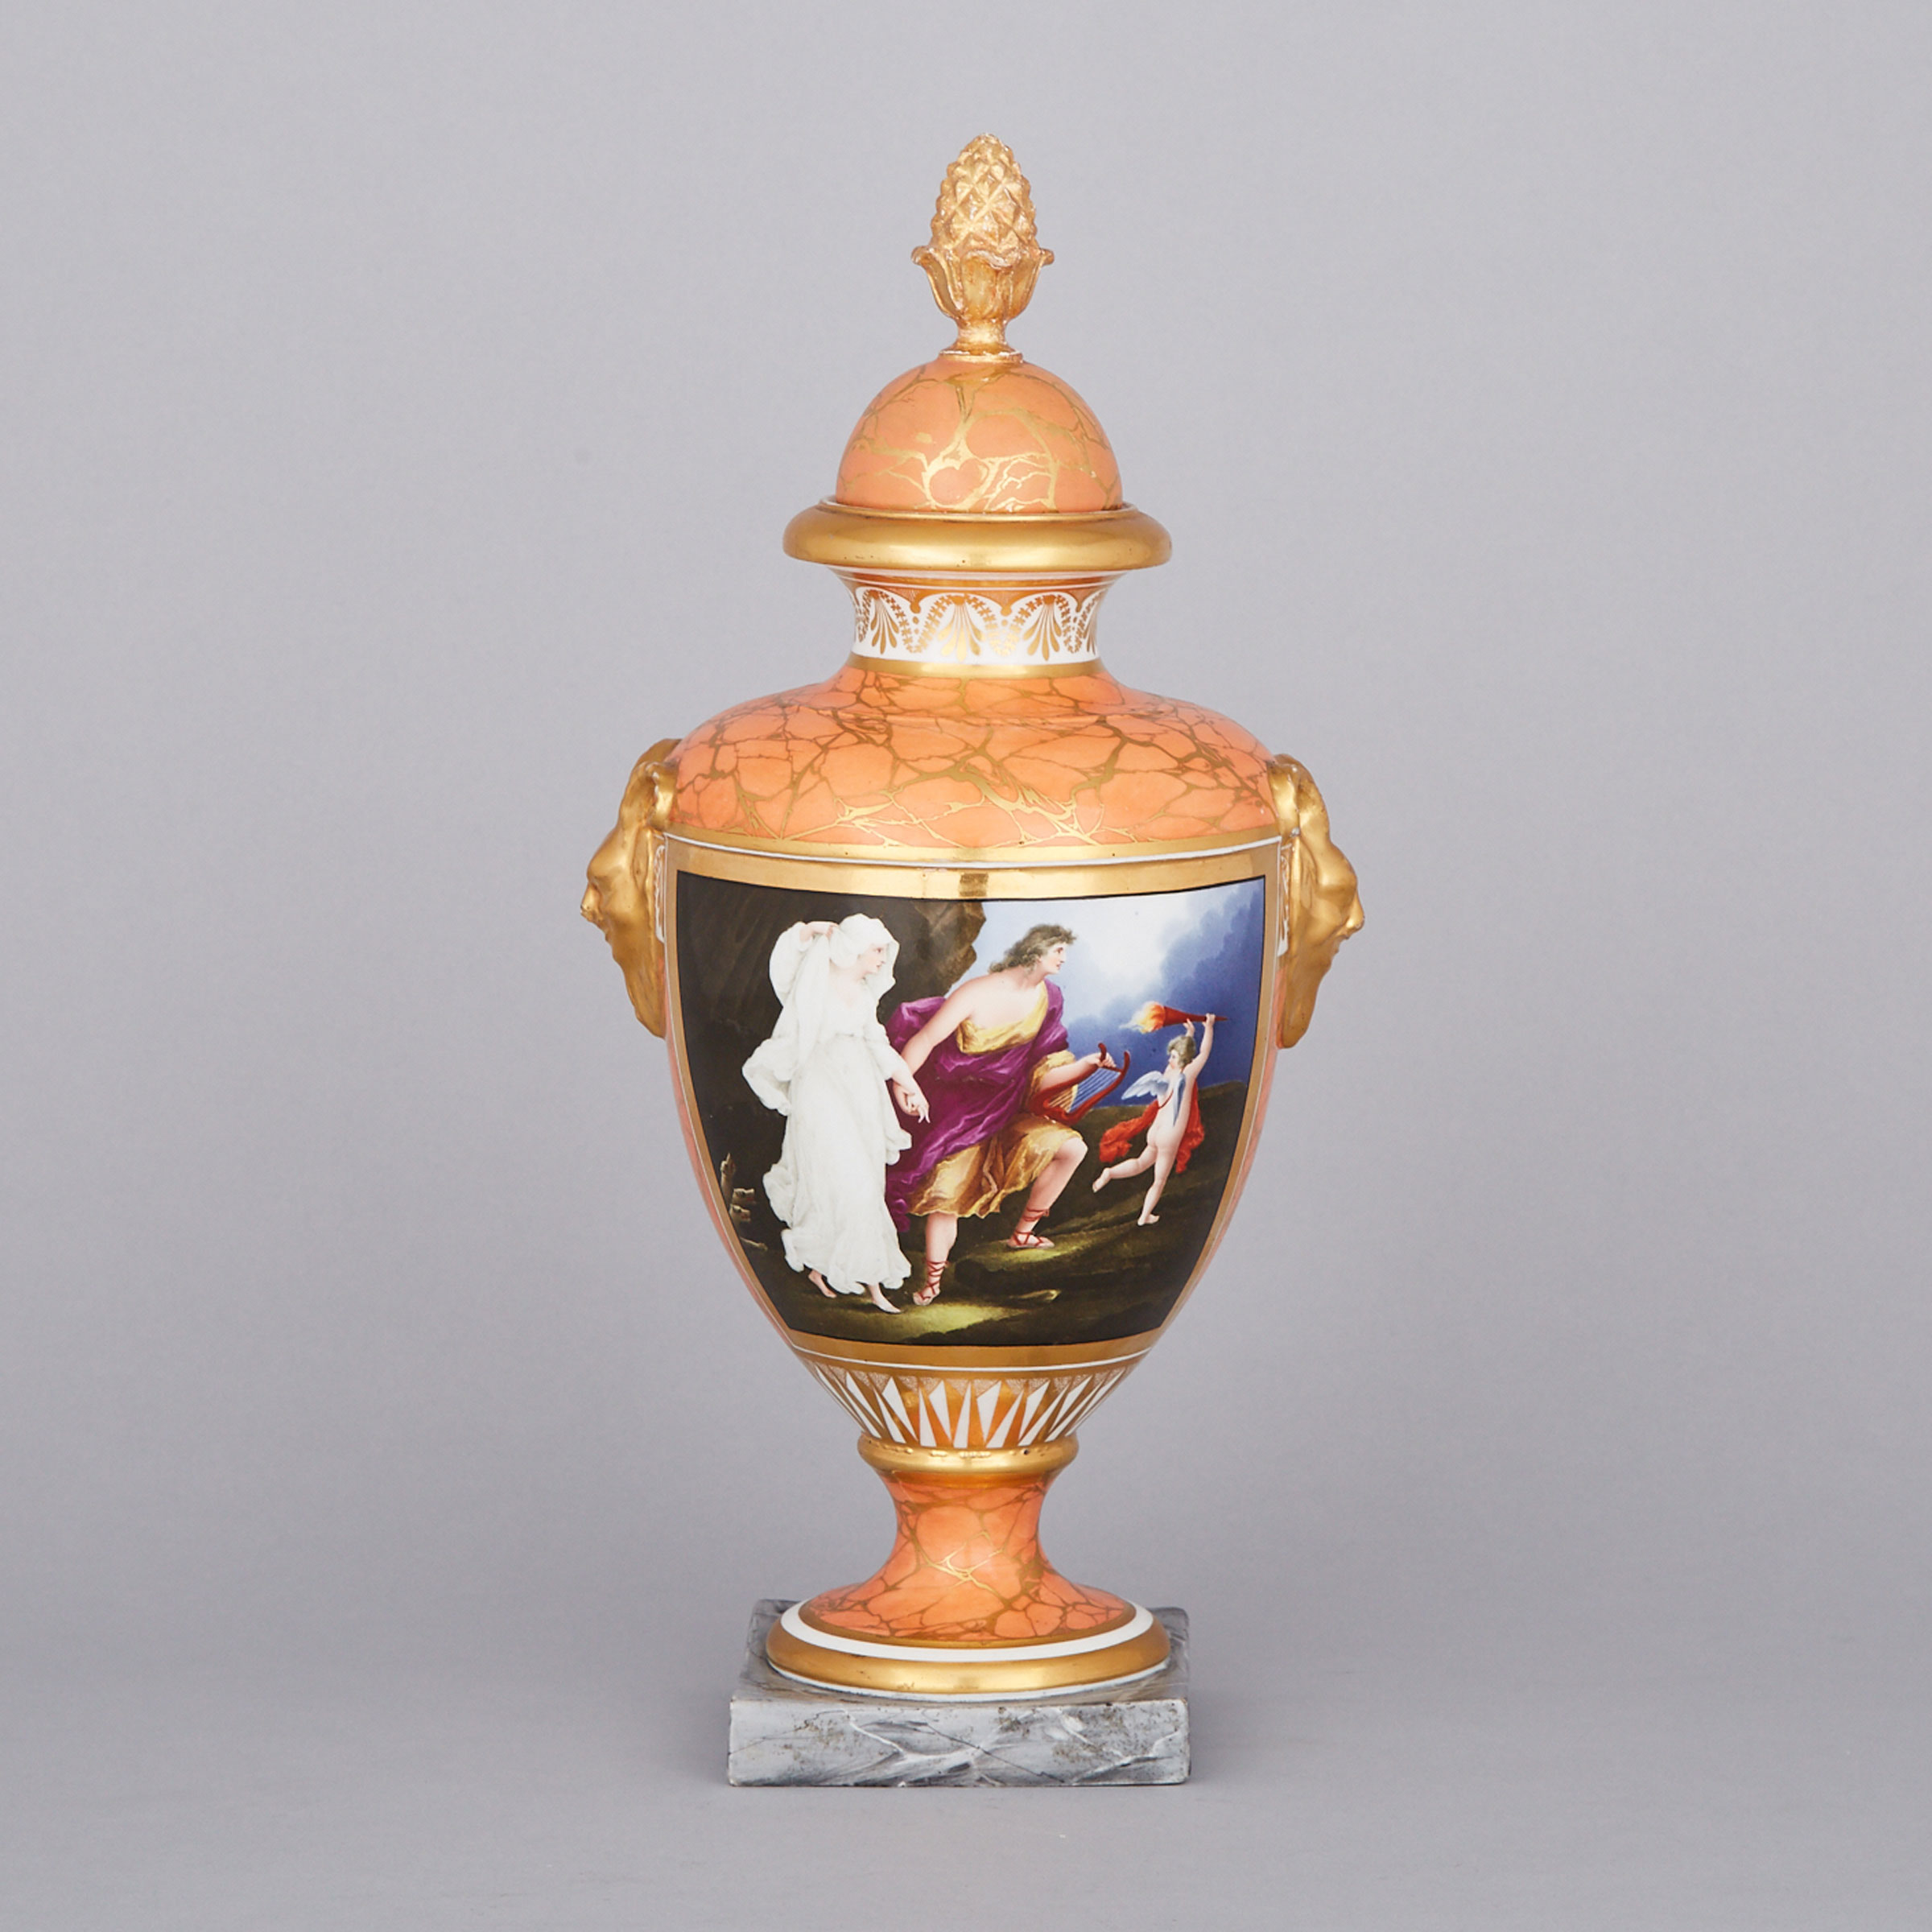 Chamberlains Worcester Orange and Gilt Marbled Ground Vase, c.1800-05